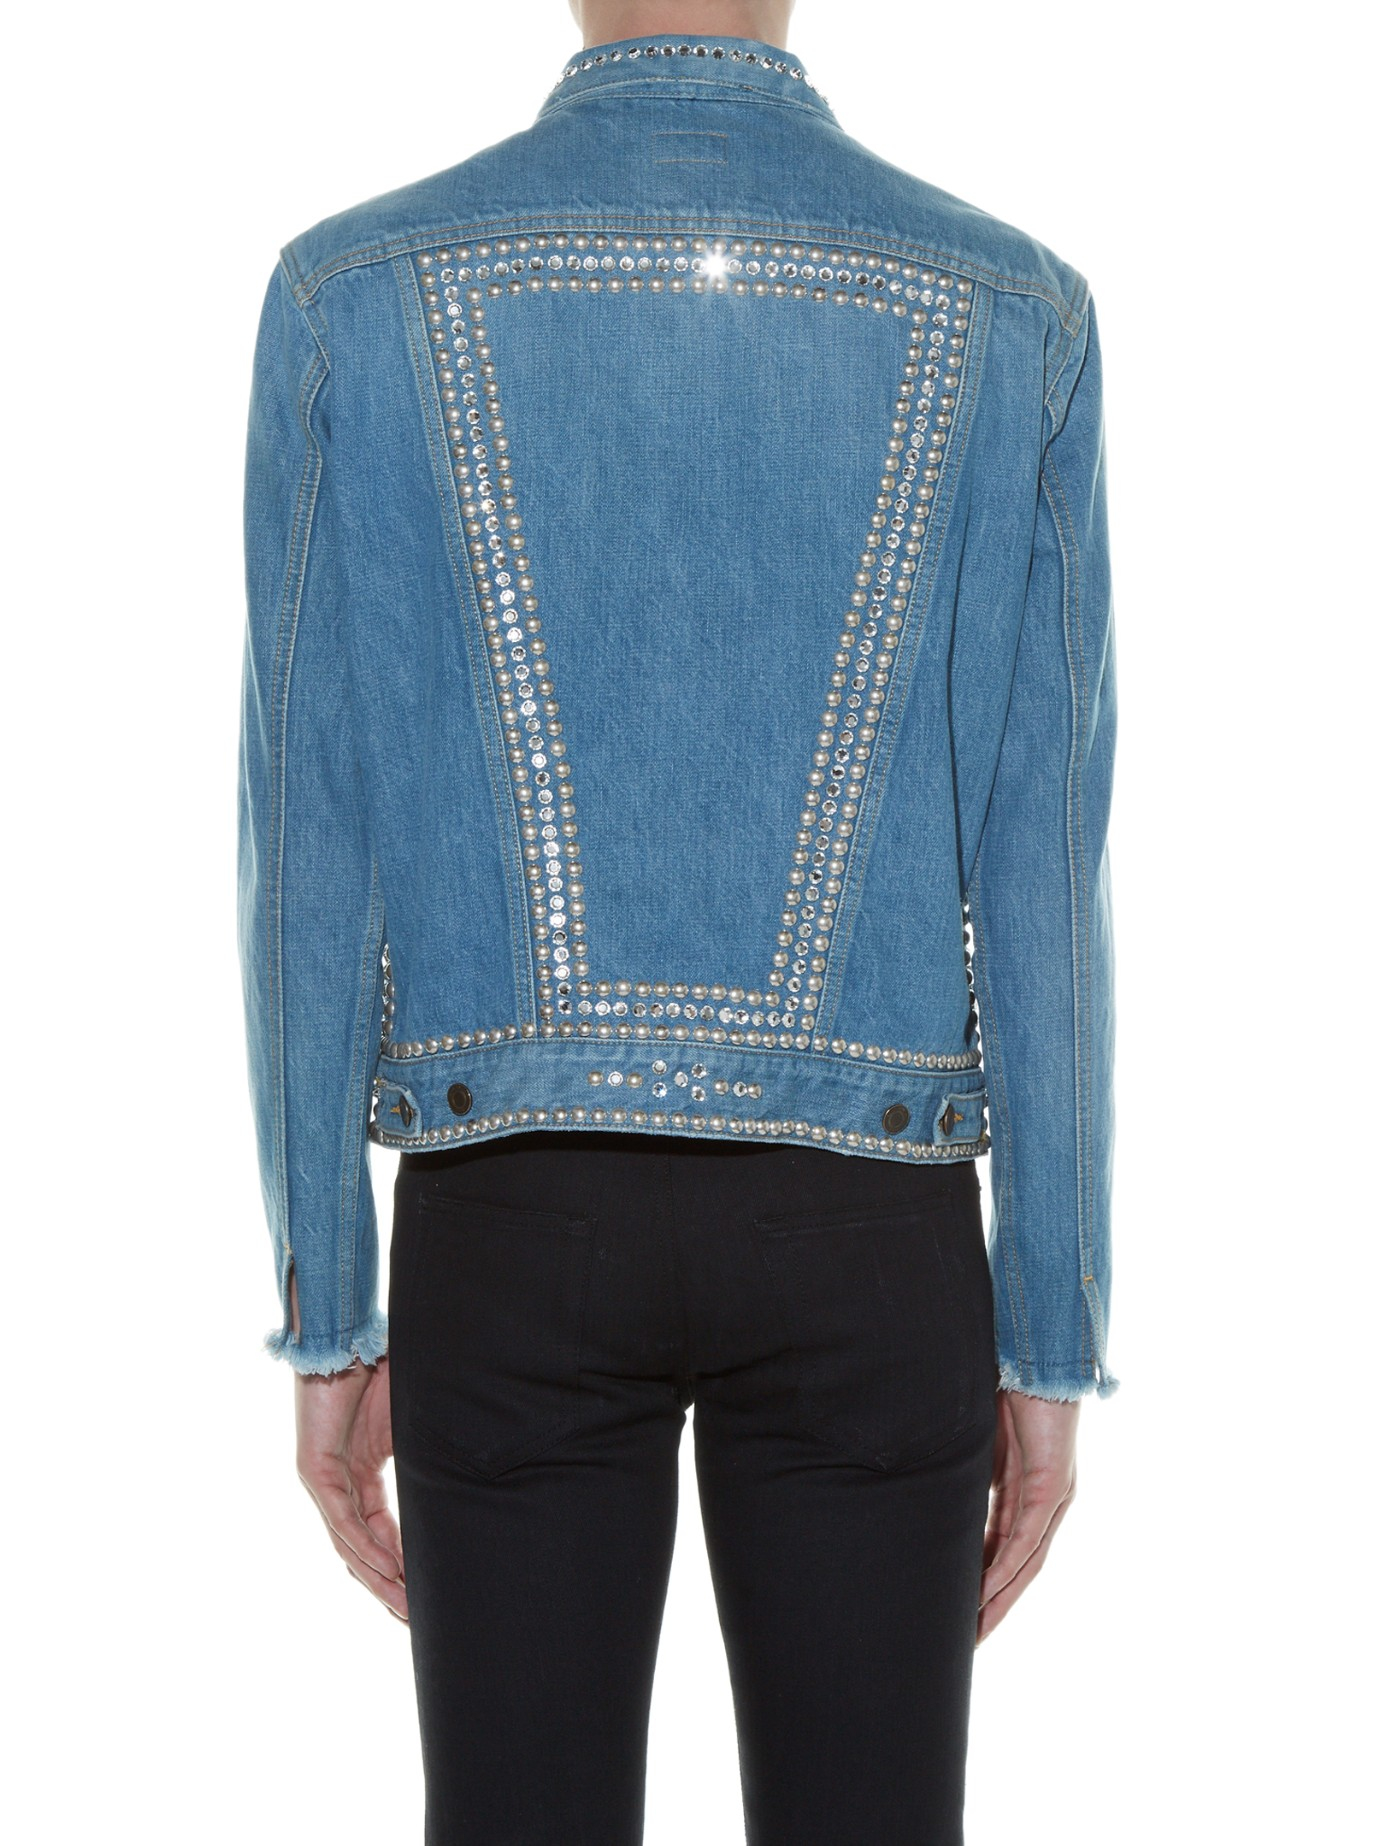 Saint Laurent Studded Denim Jacket in Blue | Lyst